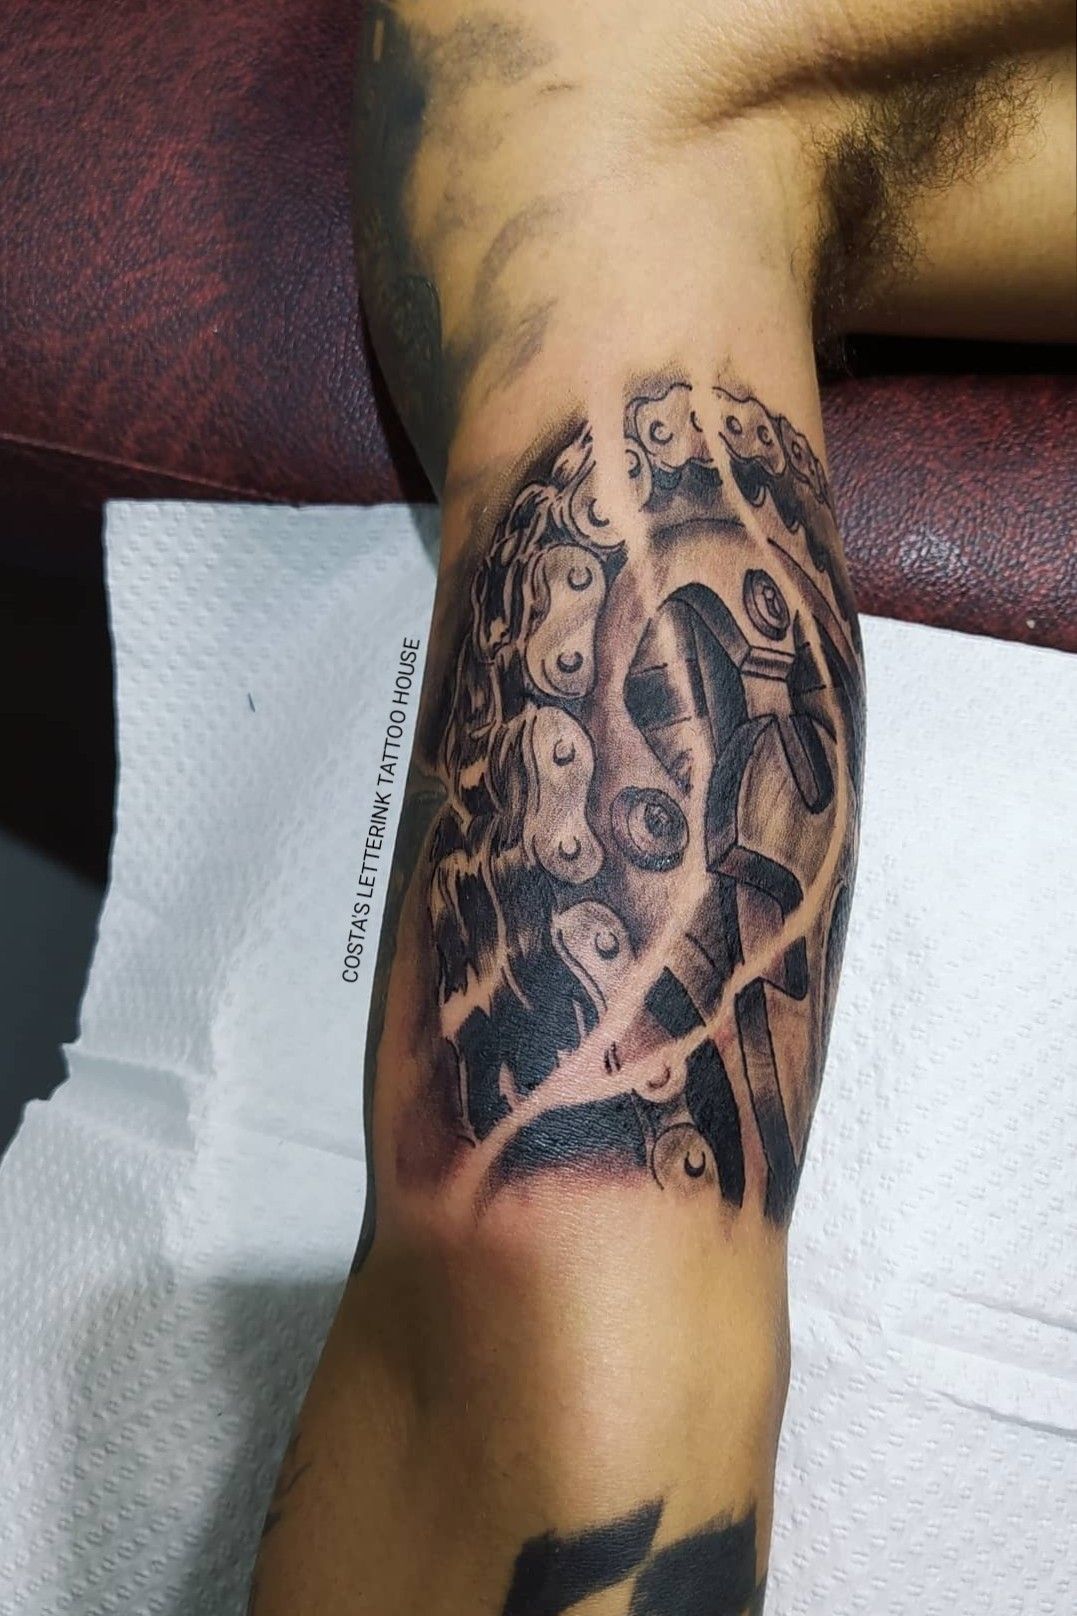 Hand tattoo - - - - - - - - - #hand #tattoo #pyramids #landscape #triangle  #bean #linework #flag #vibe #bodyart #studiosession #shop #ar... | Instagram